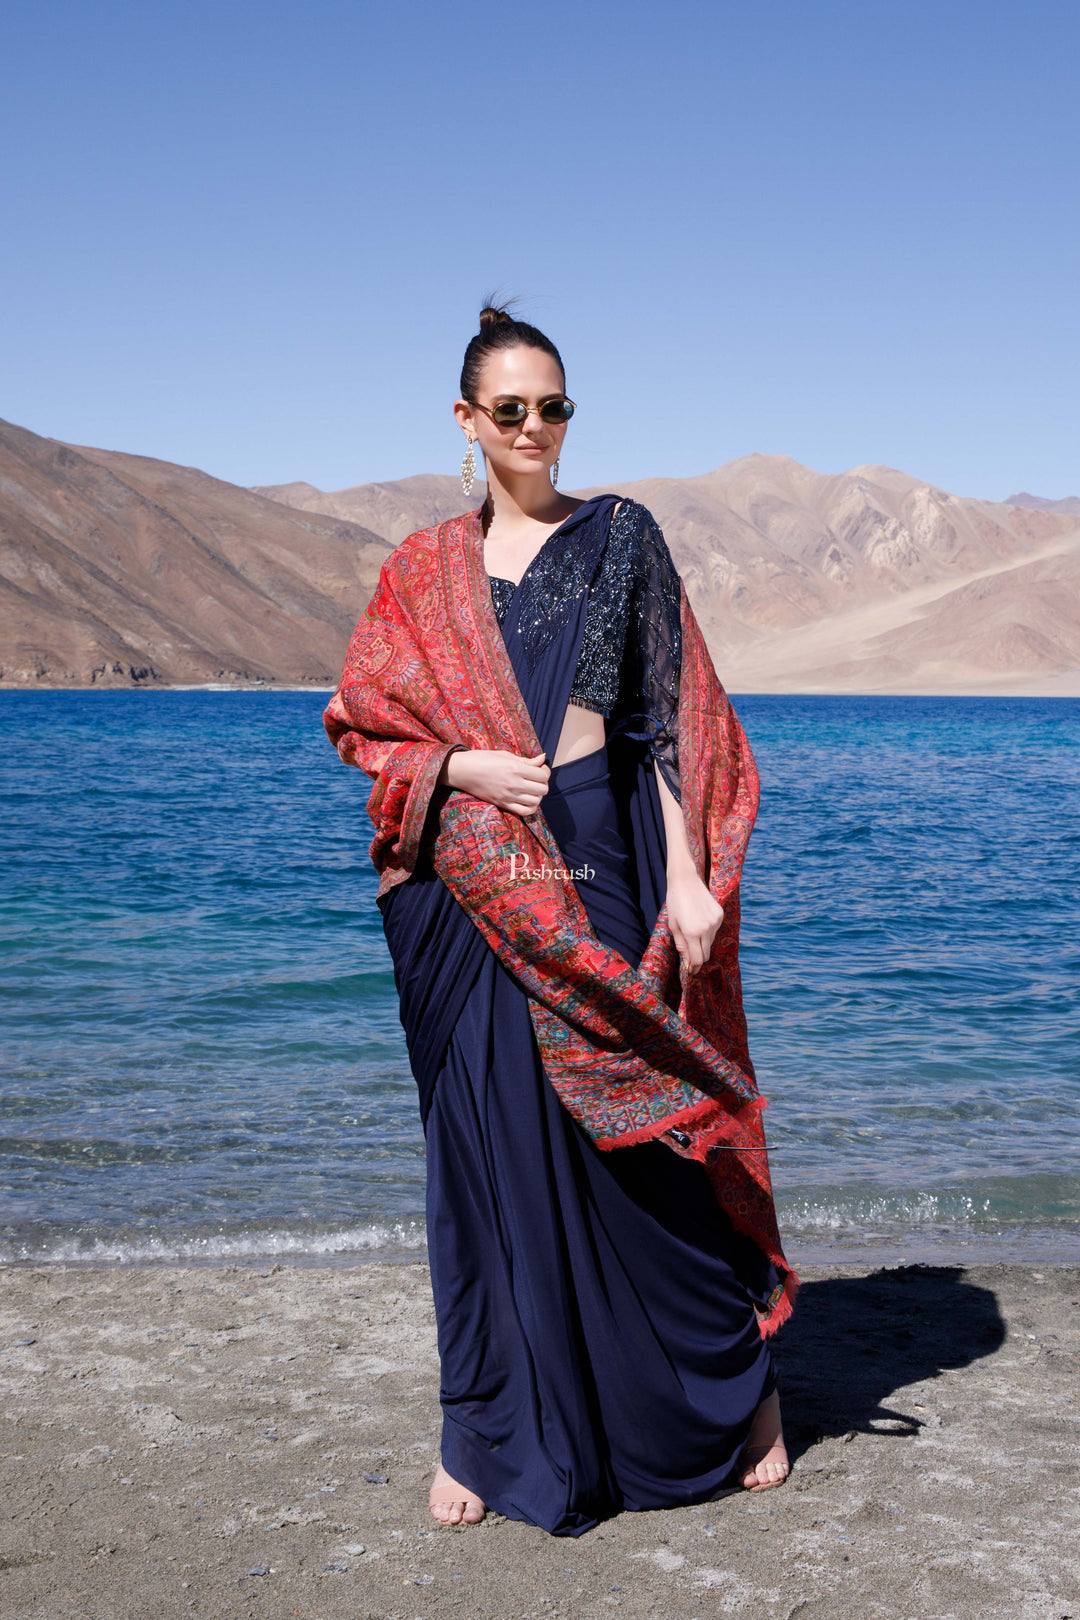 Pashtush India Womens Shawls Pashtush Womens 100% Pure Wool With Woolmark Certificate Shawl, Woven Weave Royal Doli Design, Rose